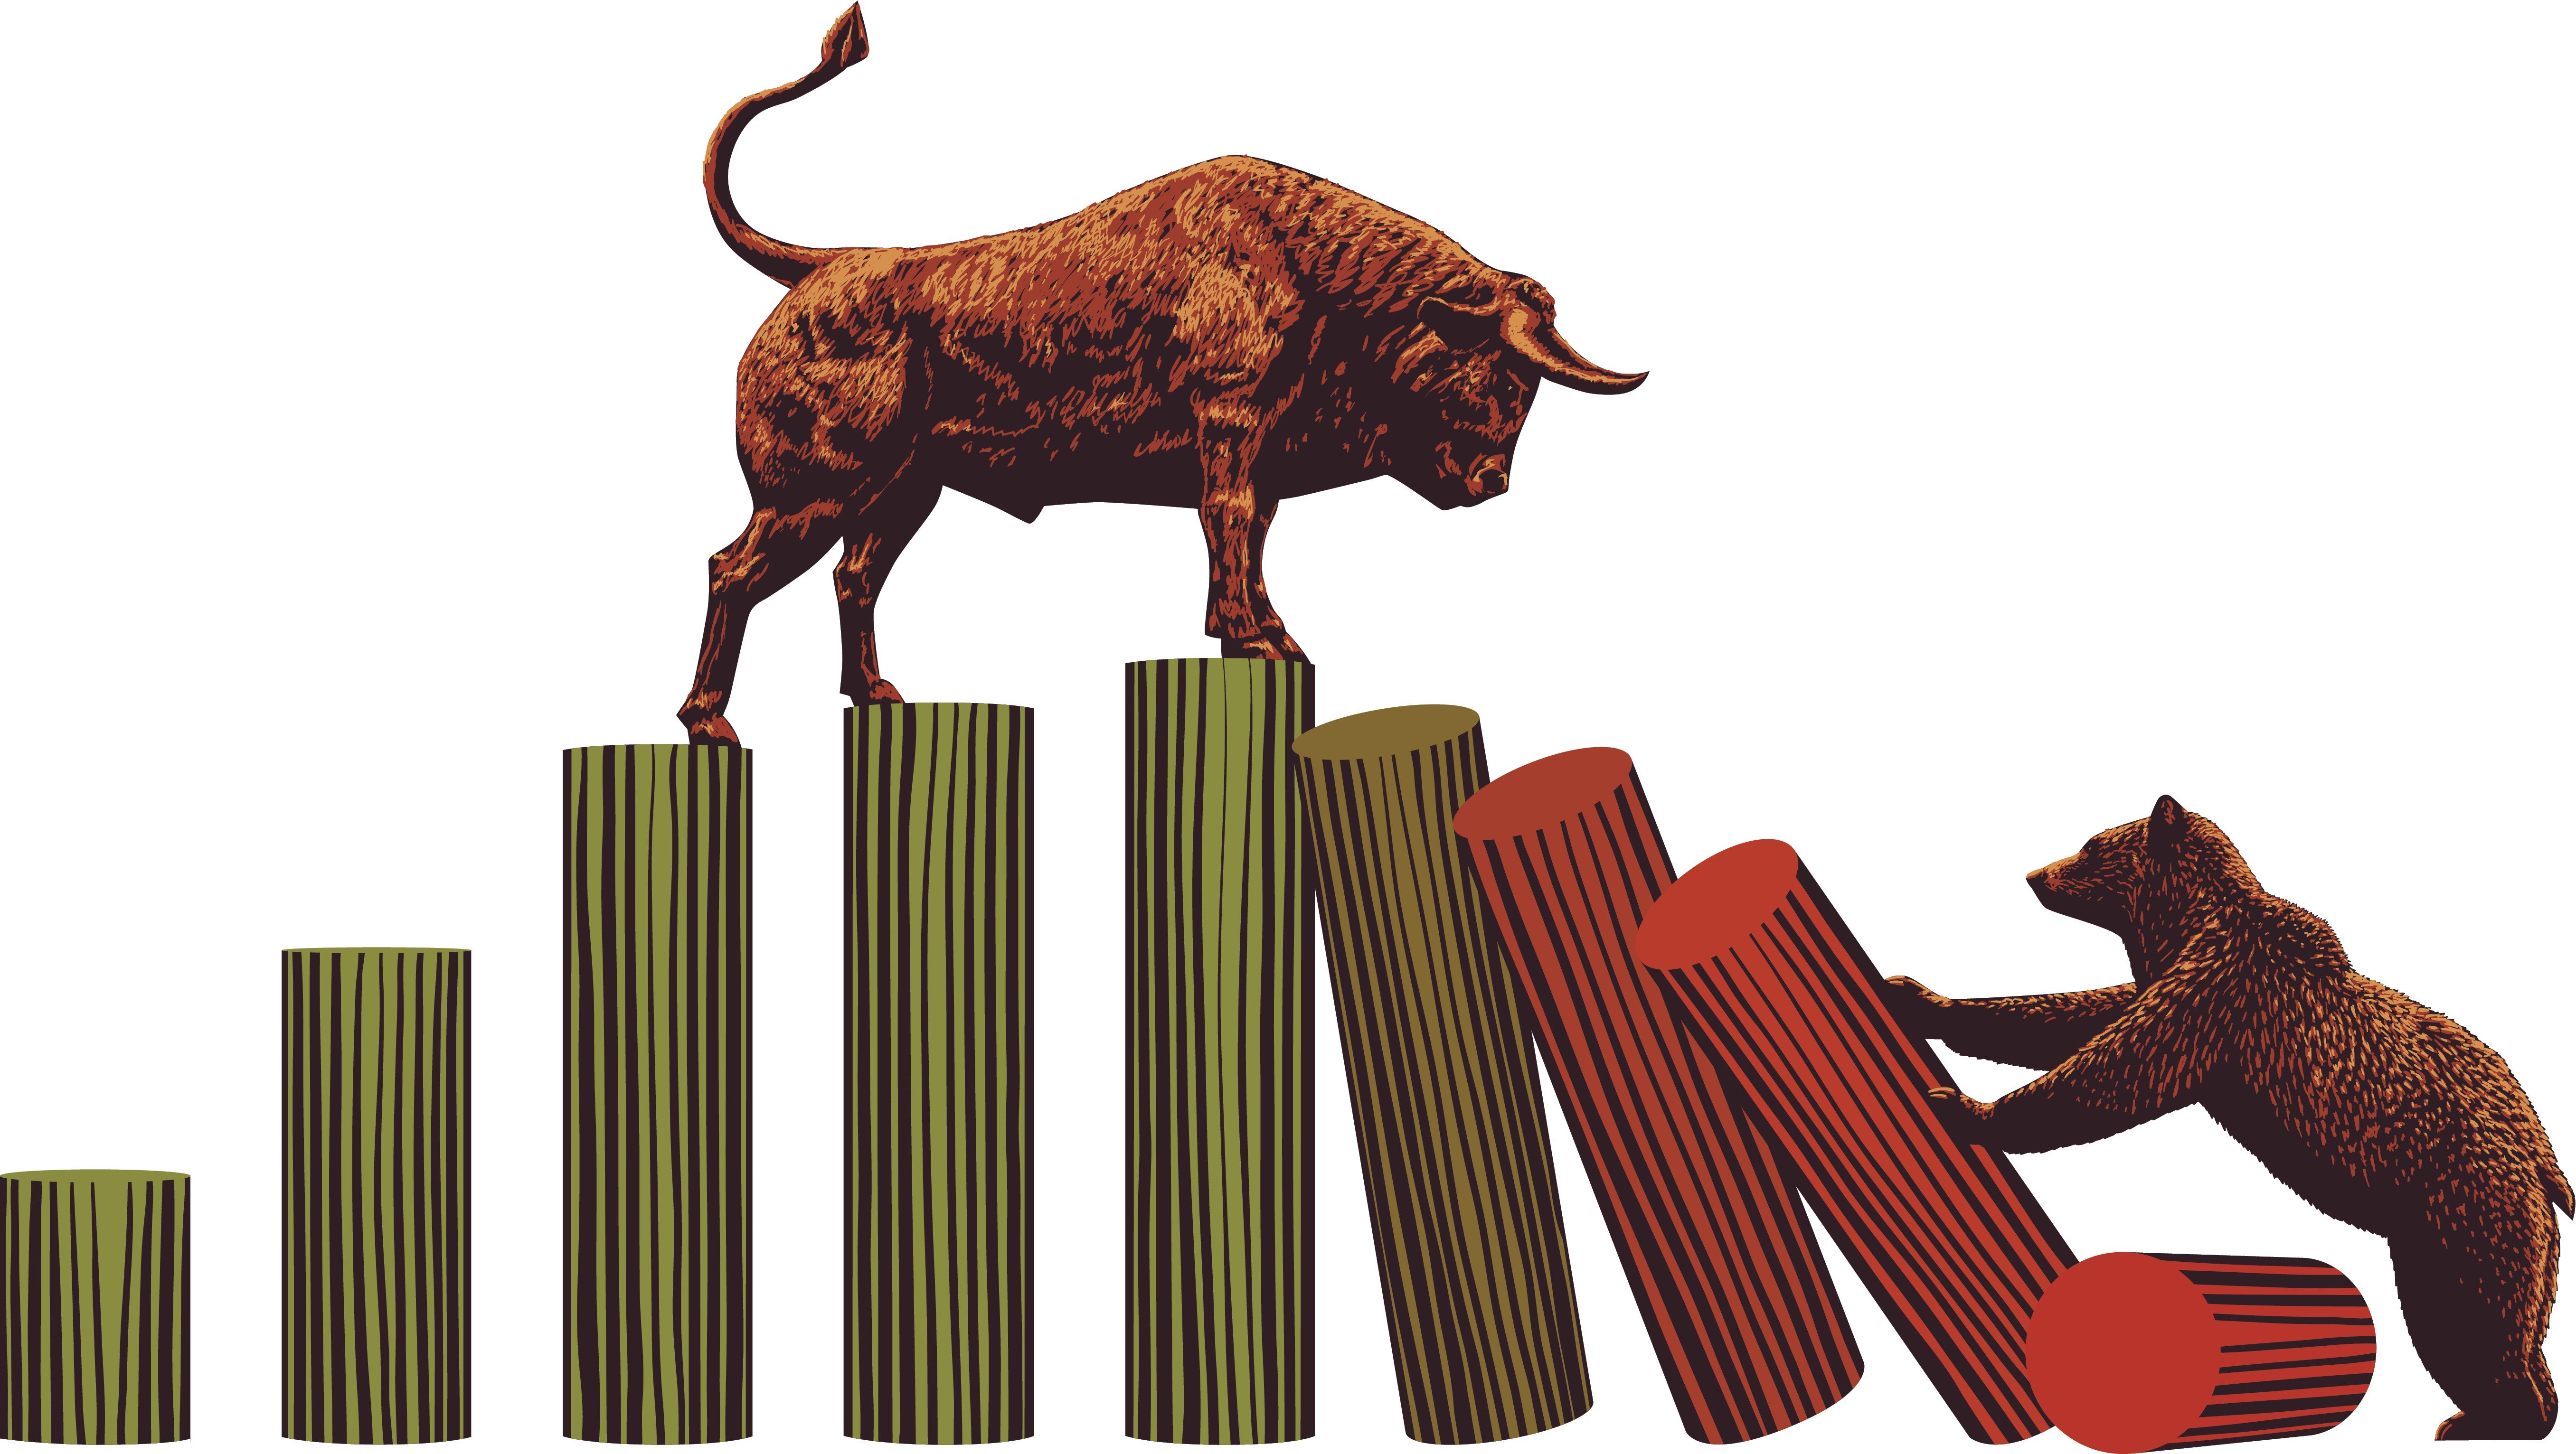 bear market bull market stocks markets funding VC venture capital